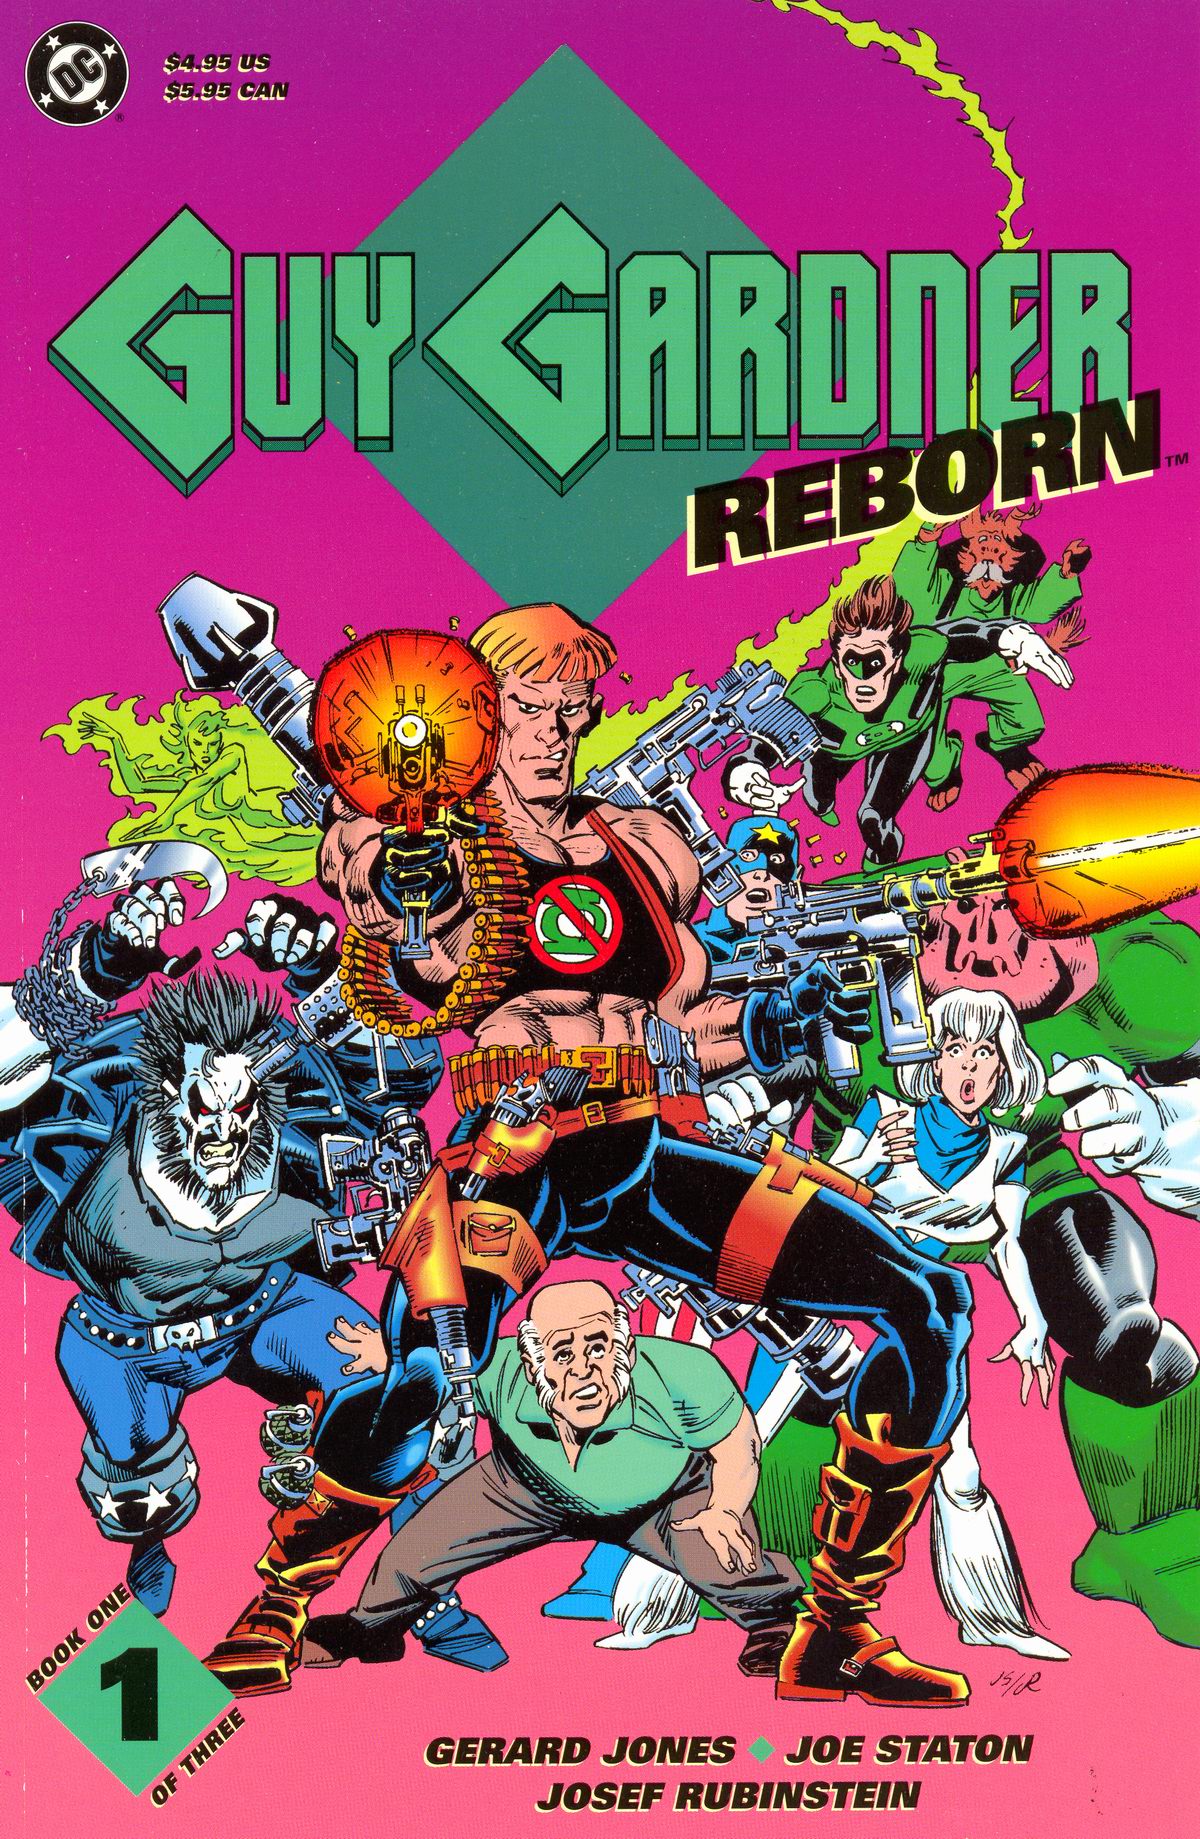 Read online Guy Gardner: Reborn comic -  Issue #1 - 1